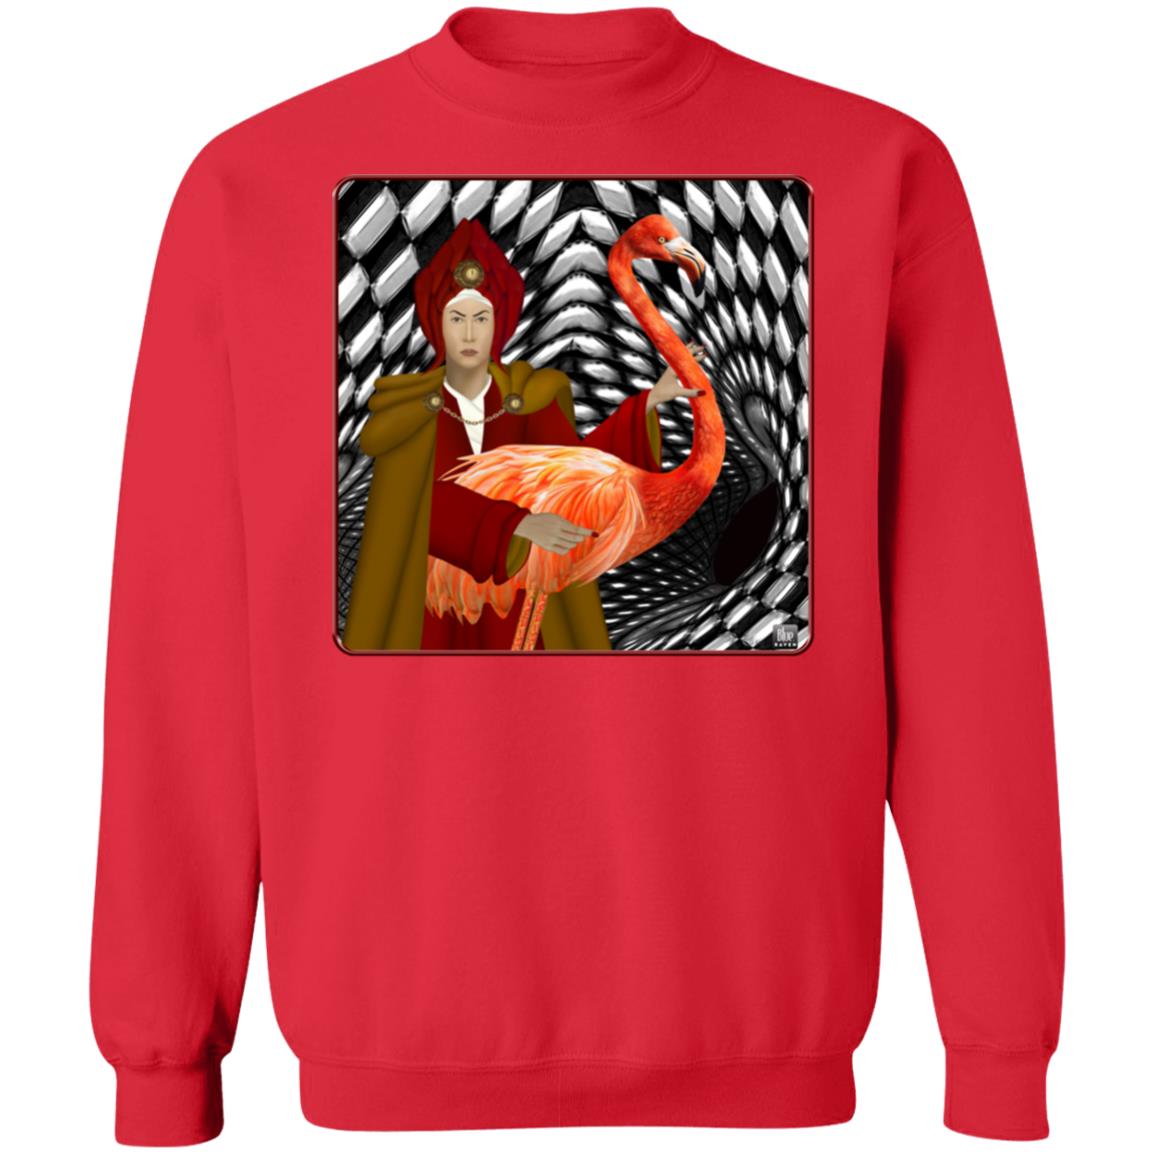 The Red Queen With The Flamingo - Unisex Crew Neck Sweatshirt